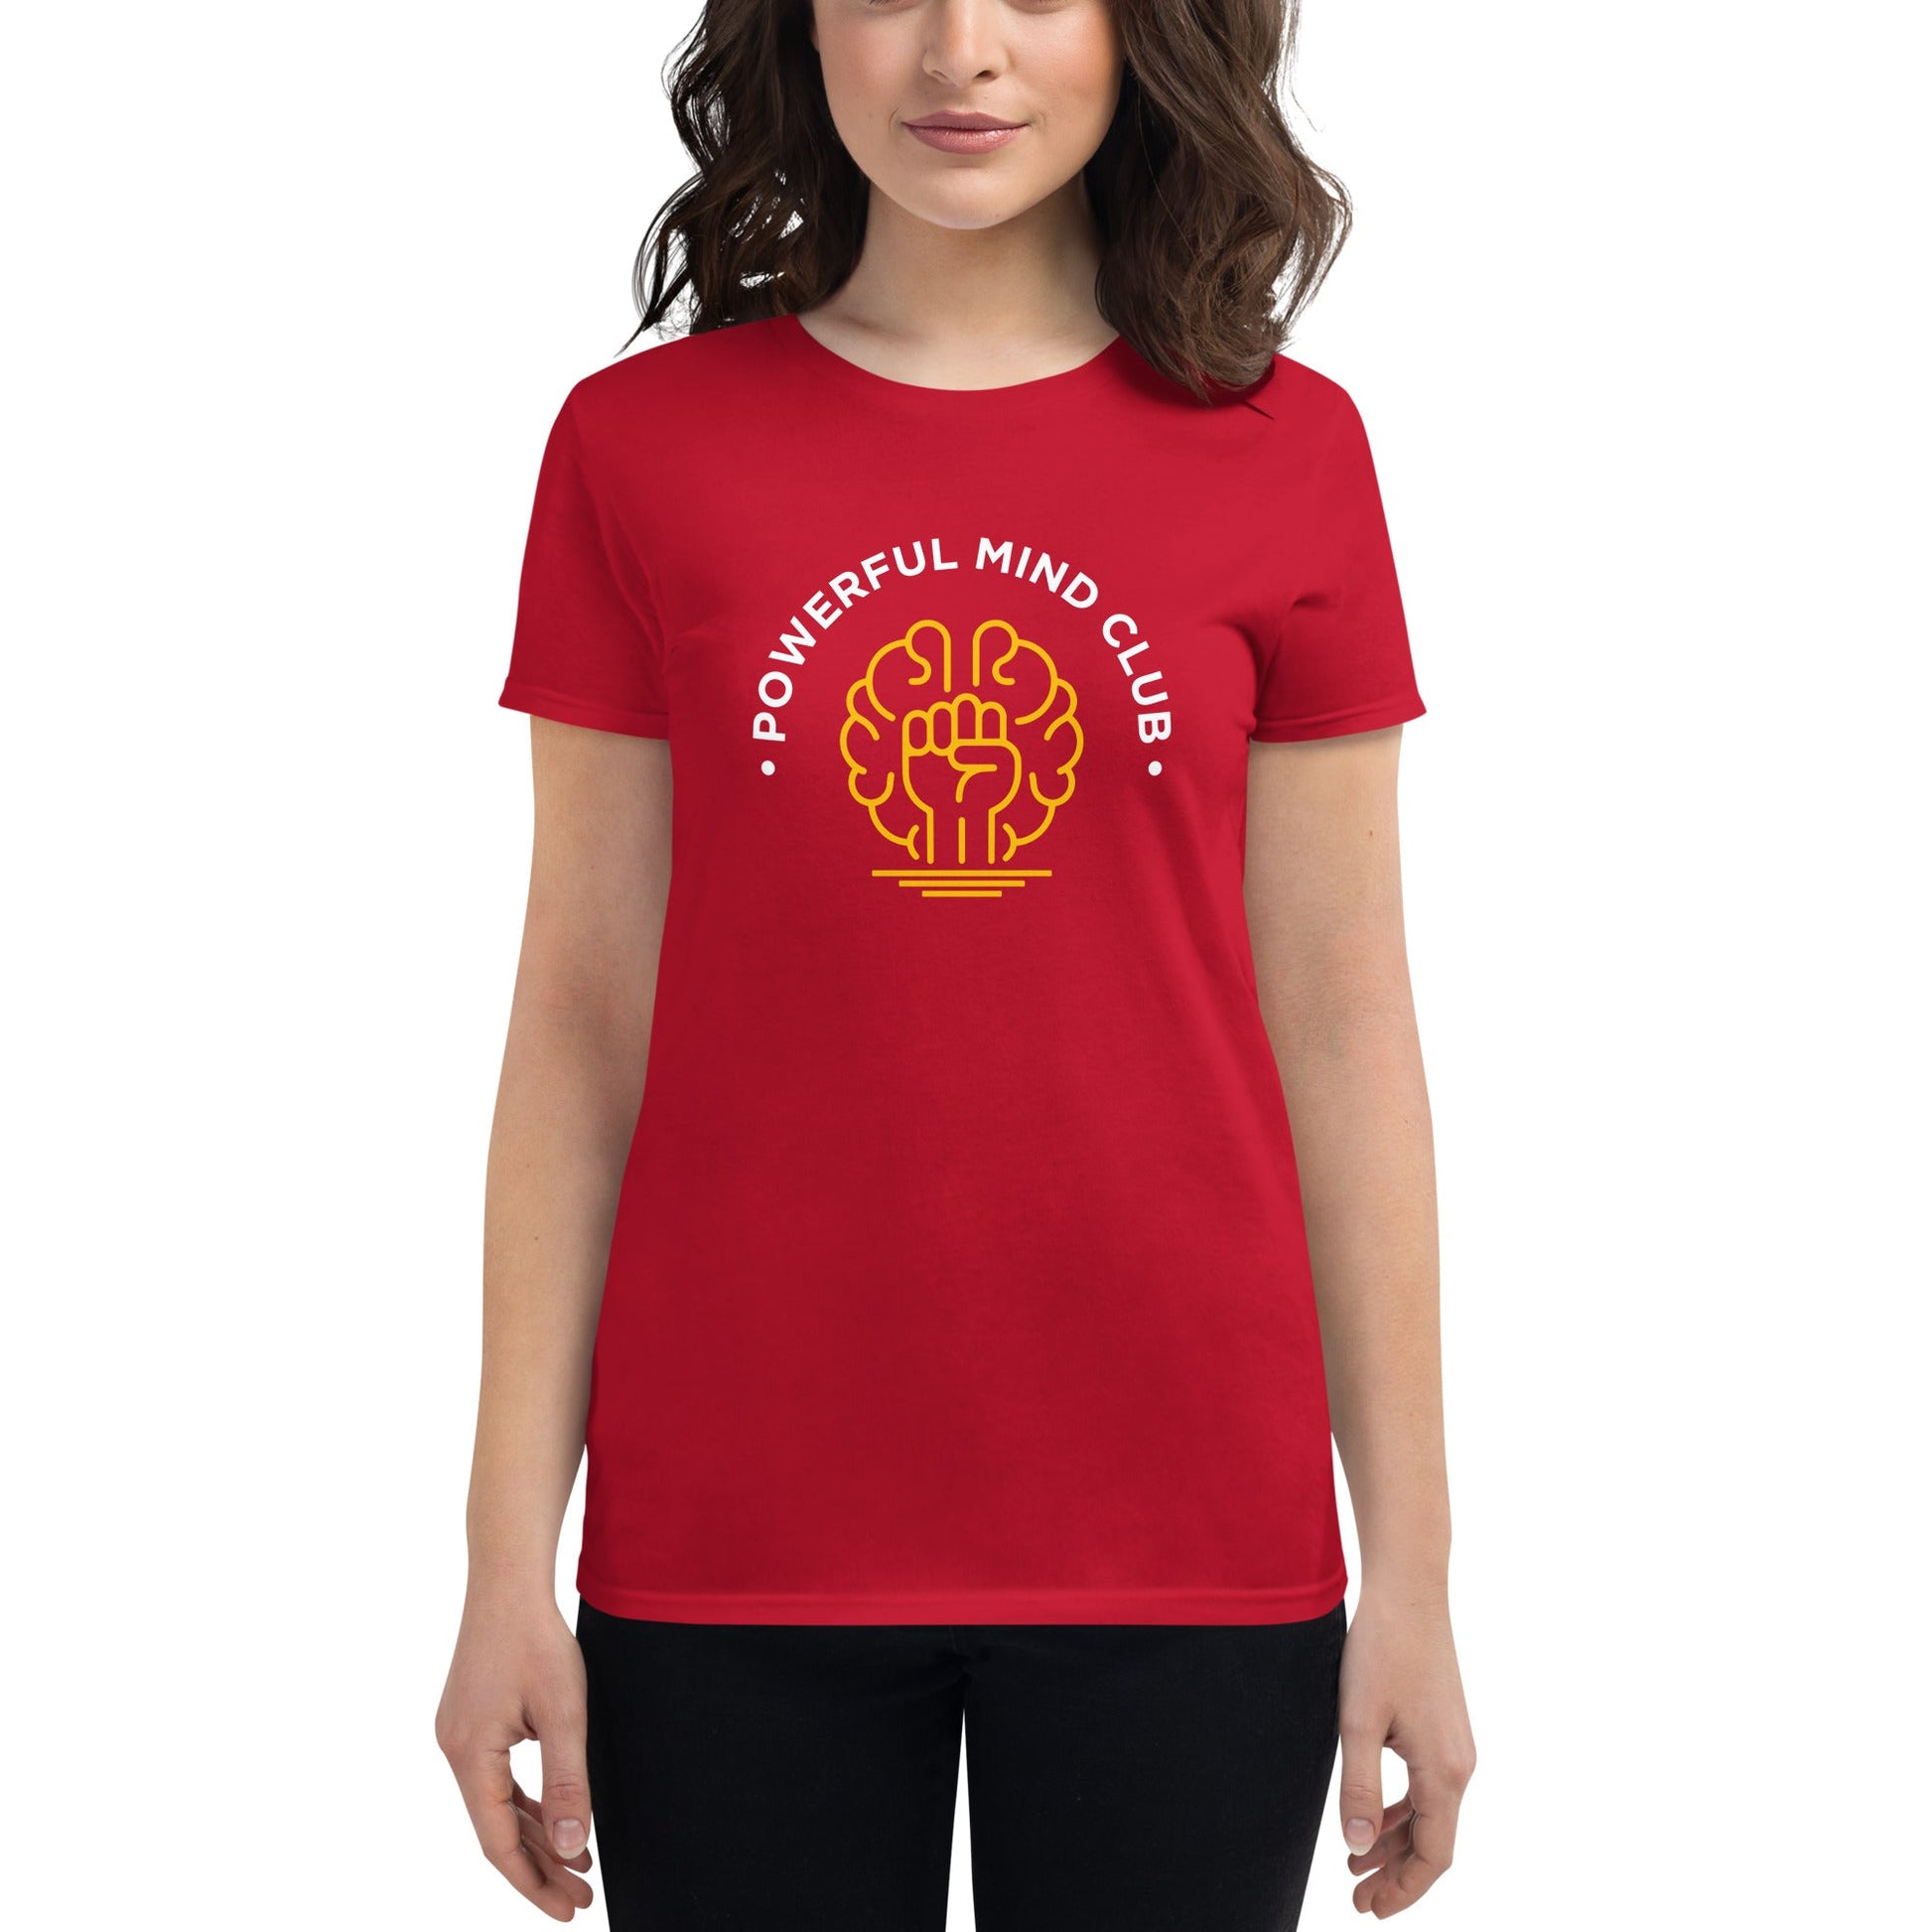 Powerful Mind Club™ Women's Fitted t-shirt - Powerful Mind Club